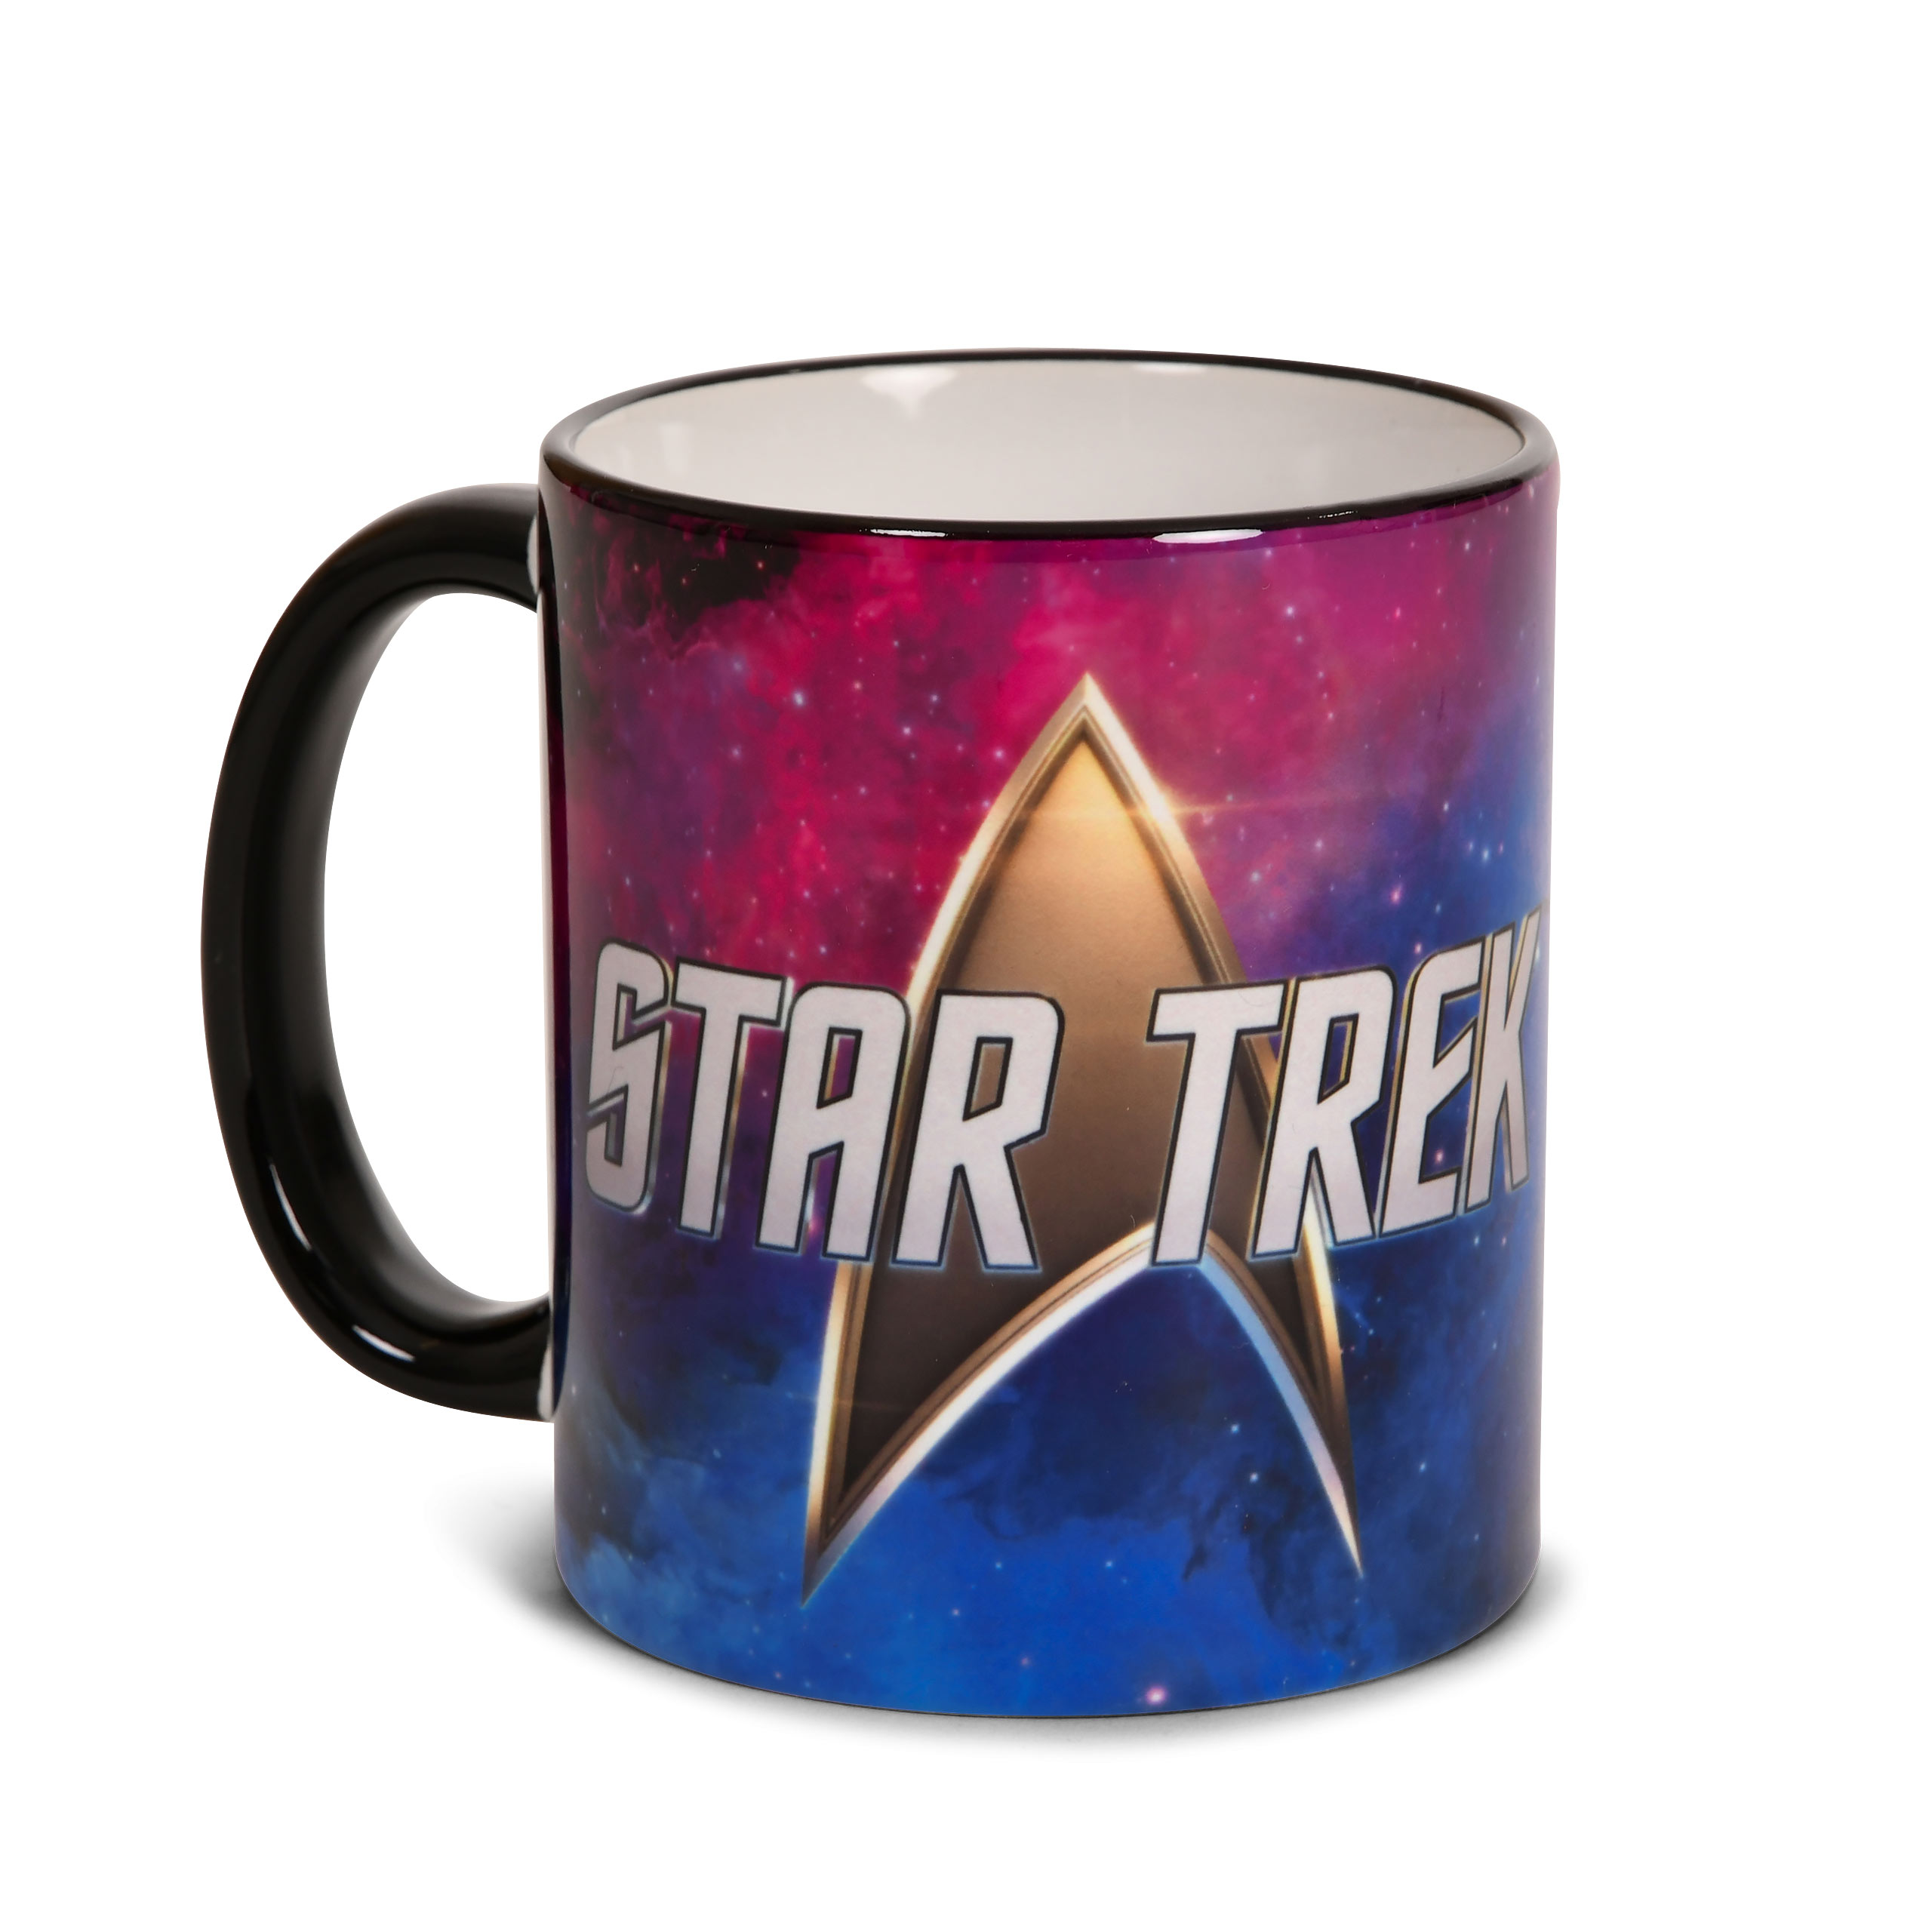 Star Trek - Mr. Spock Mug